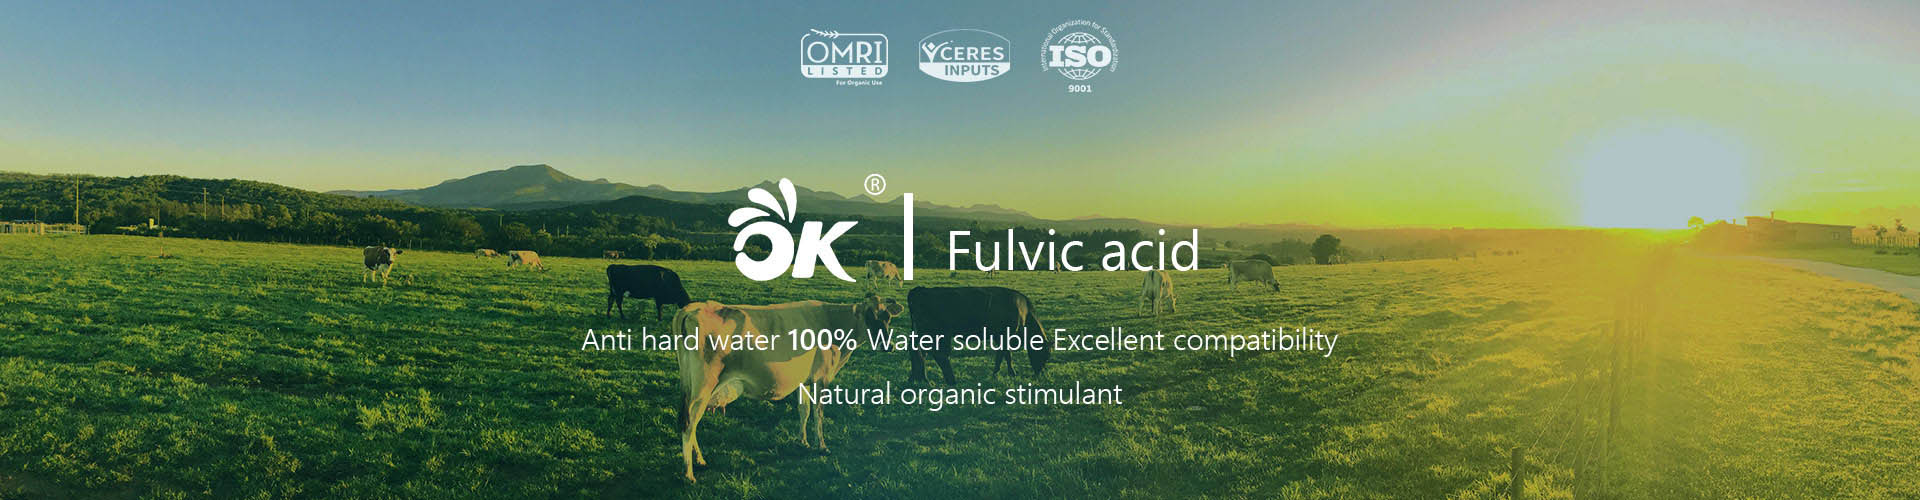 okhumate-X-HUMATE-anti-hard-water-100-water-soluble-humic-acid-humate-fulvic-seaweed-extract-omri-listed